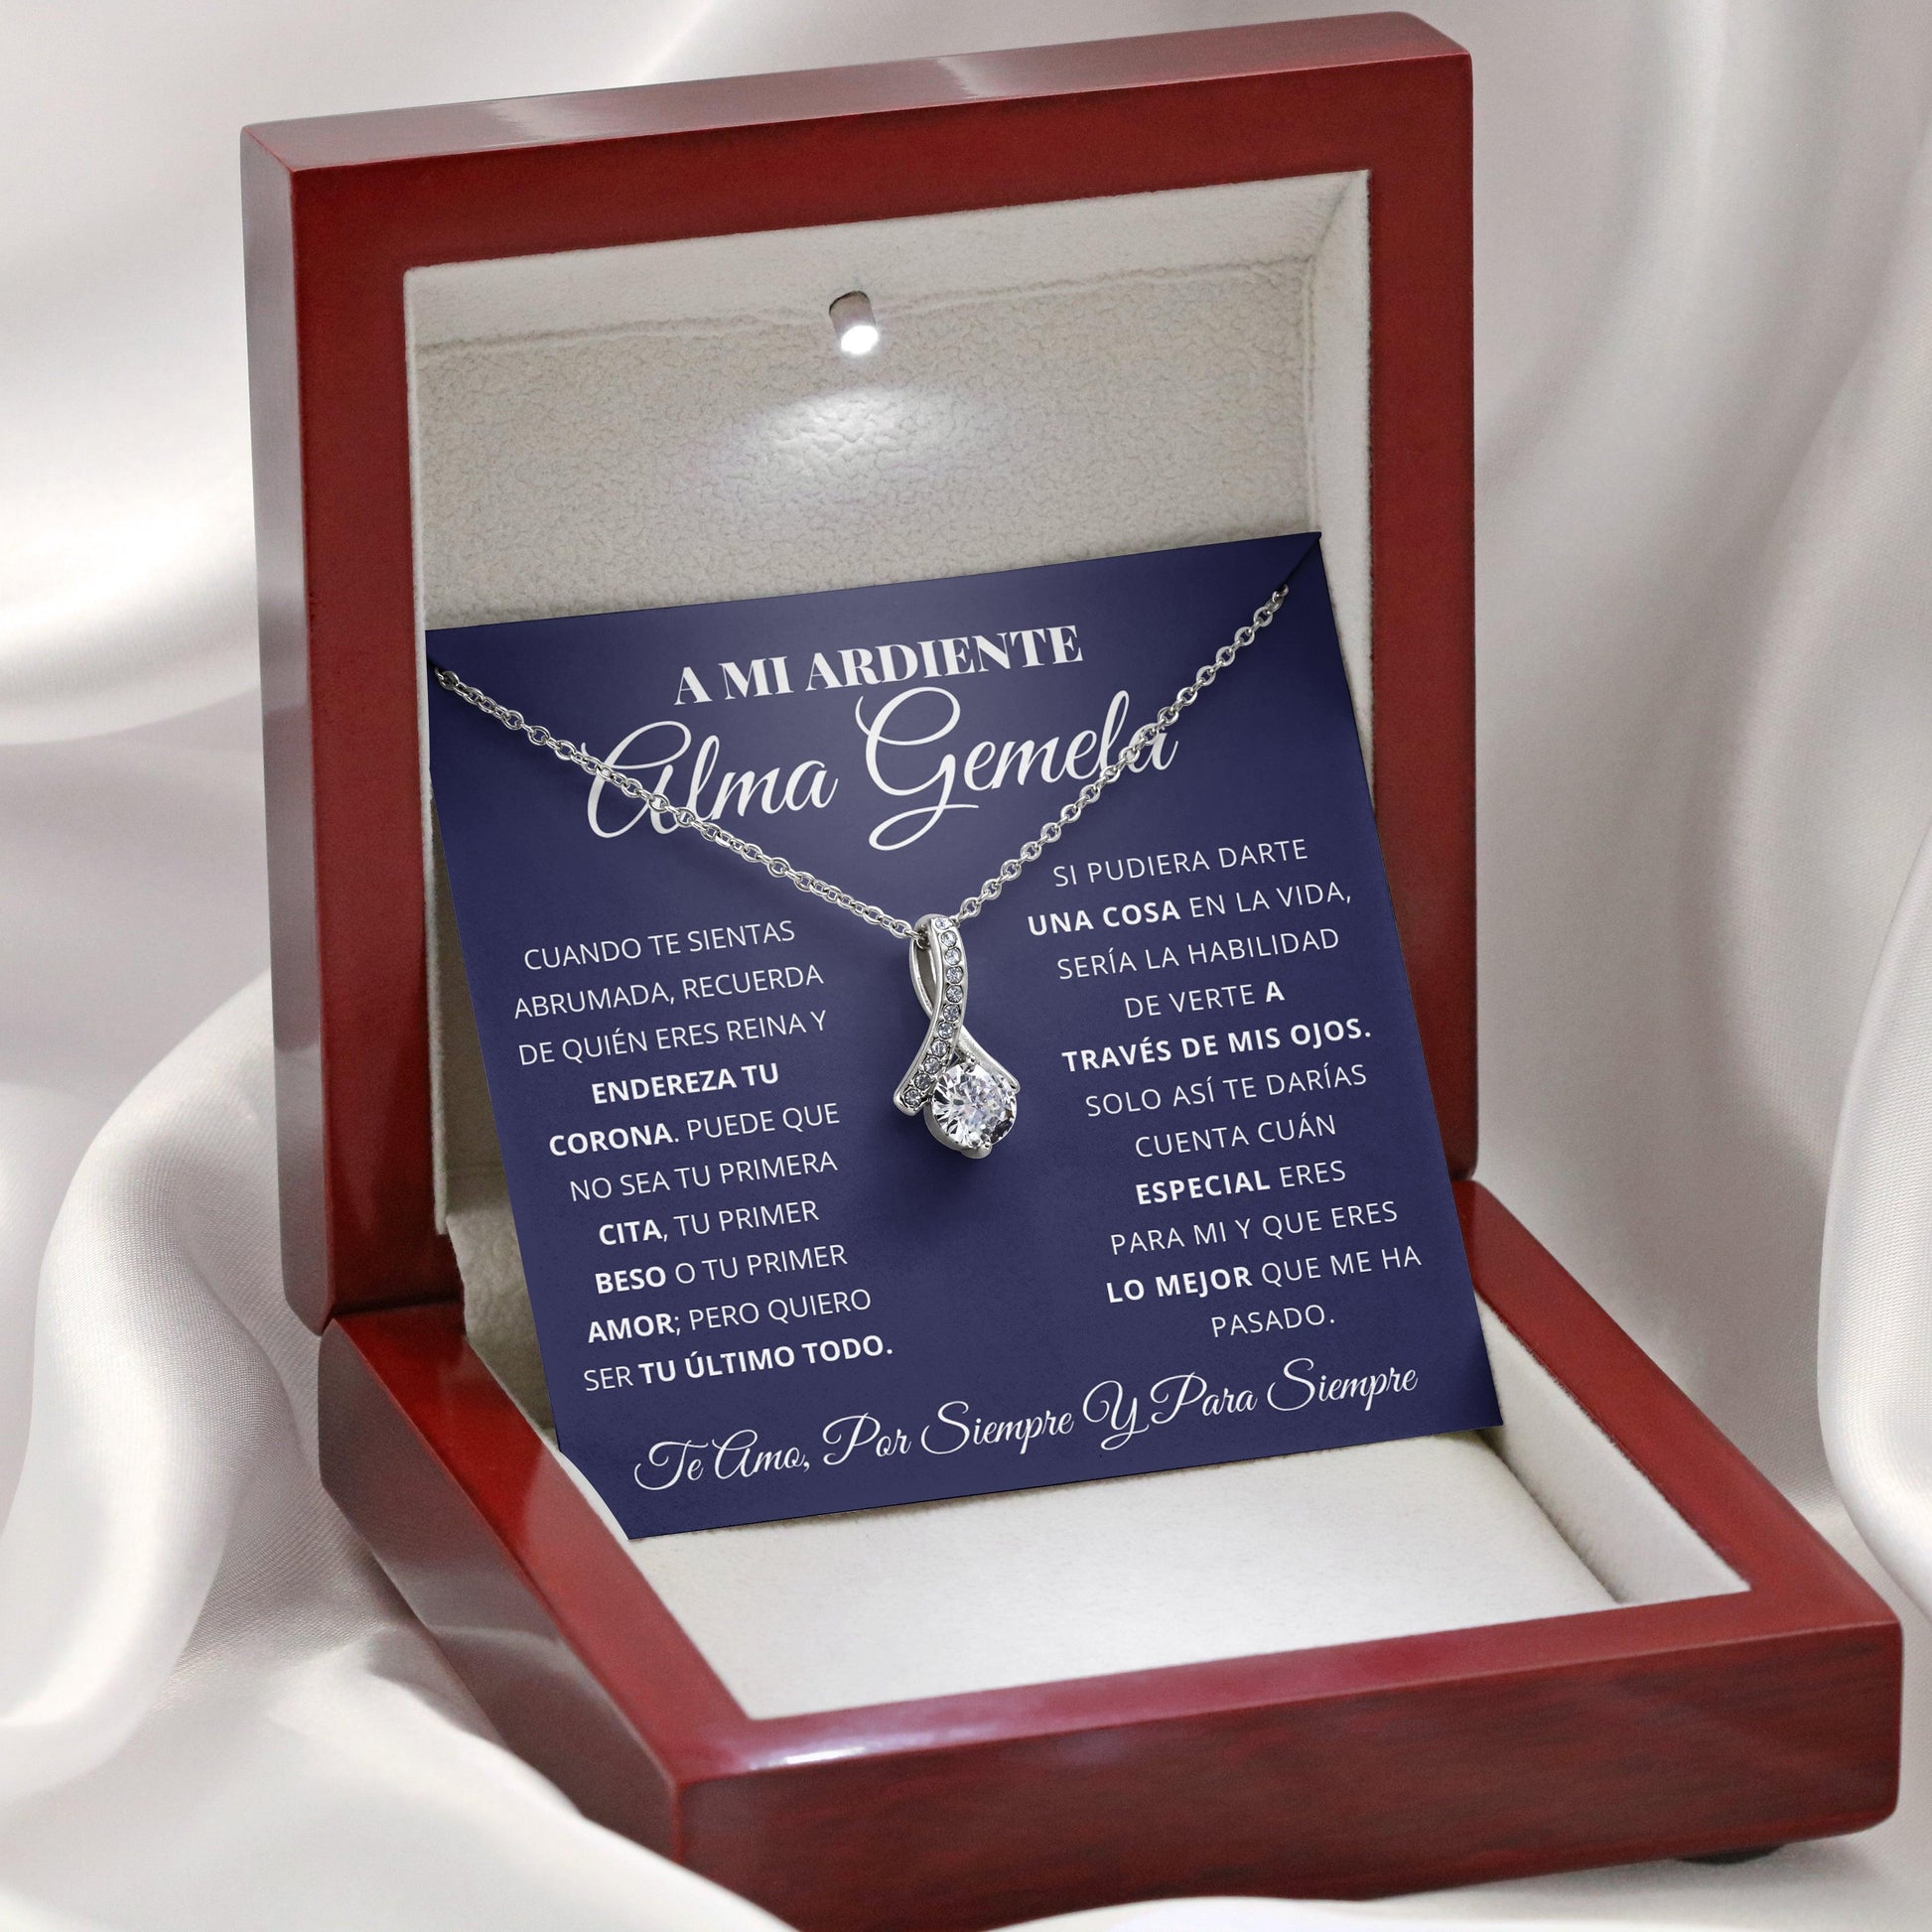 Jewelry gifts ALMA GEMELA - A MI ARDIENTE  - Collar - Belesmé - Memorable Jewelry Gifts